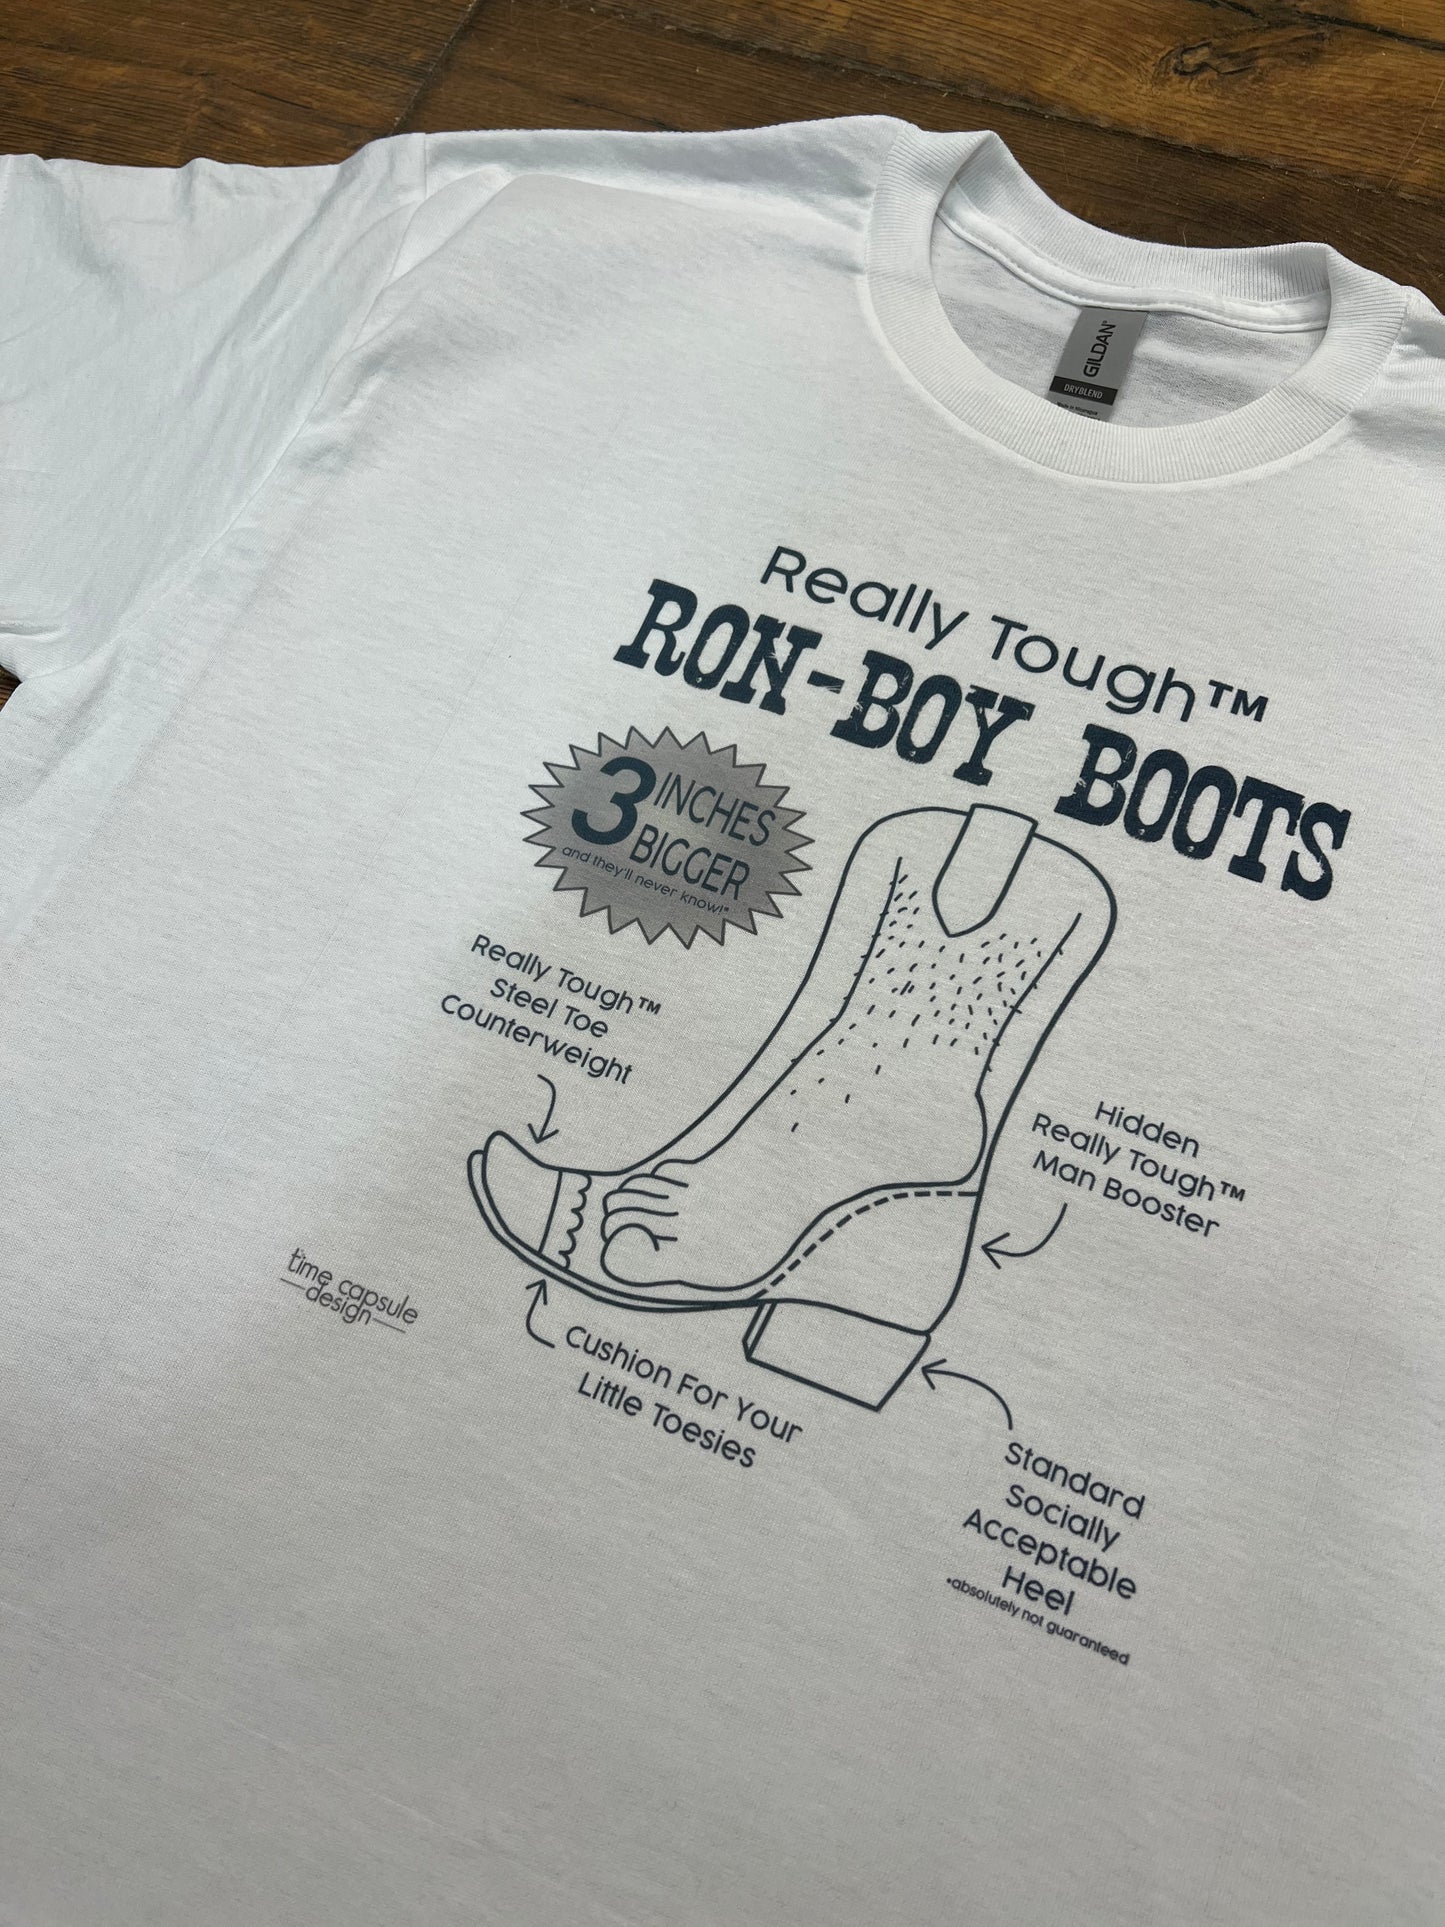 Ron-Boy Boots Really Tough TM Ron DeSantis Shirt